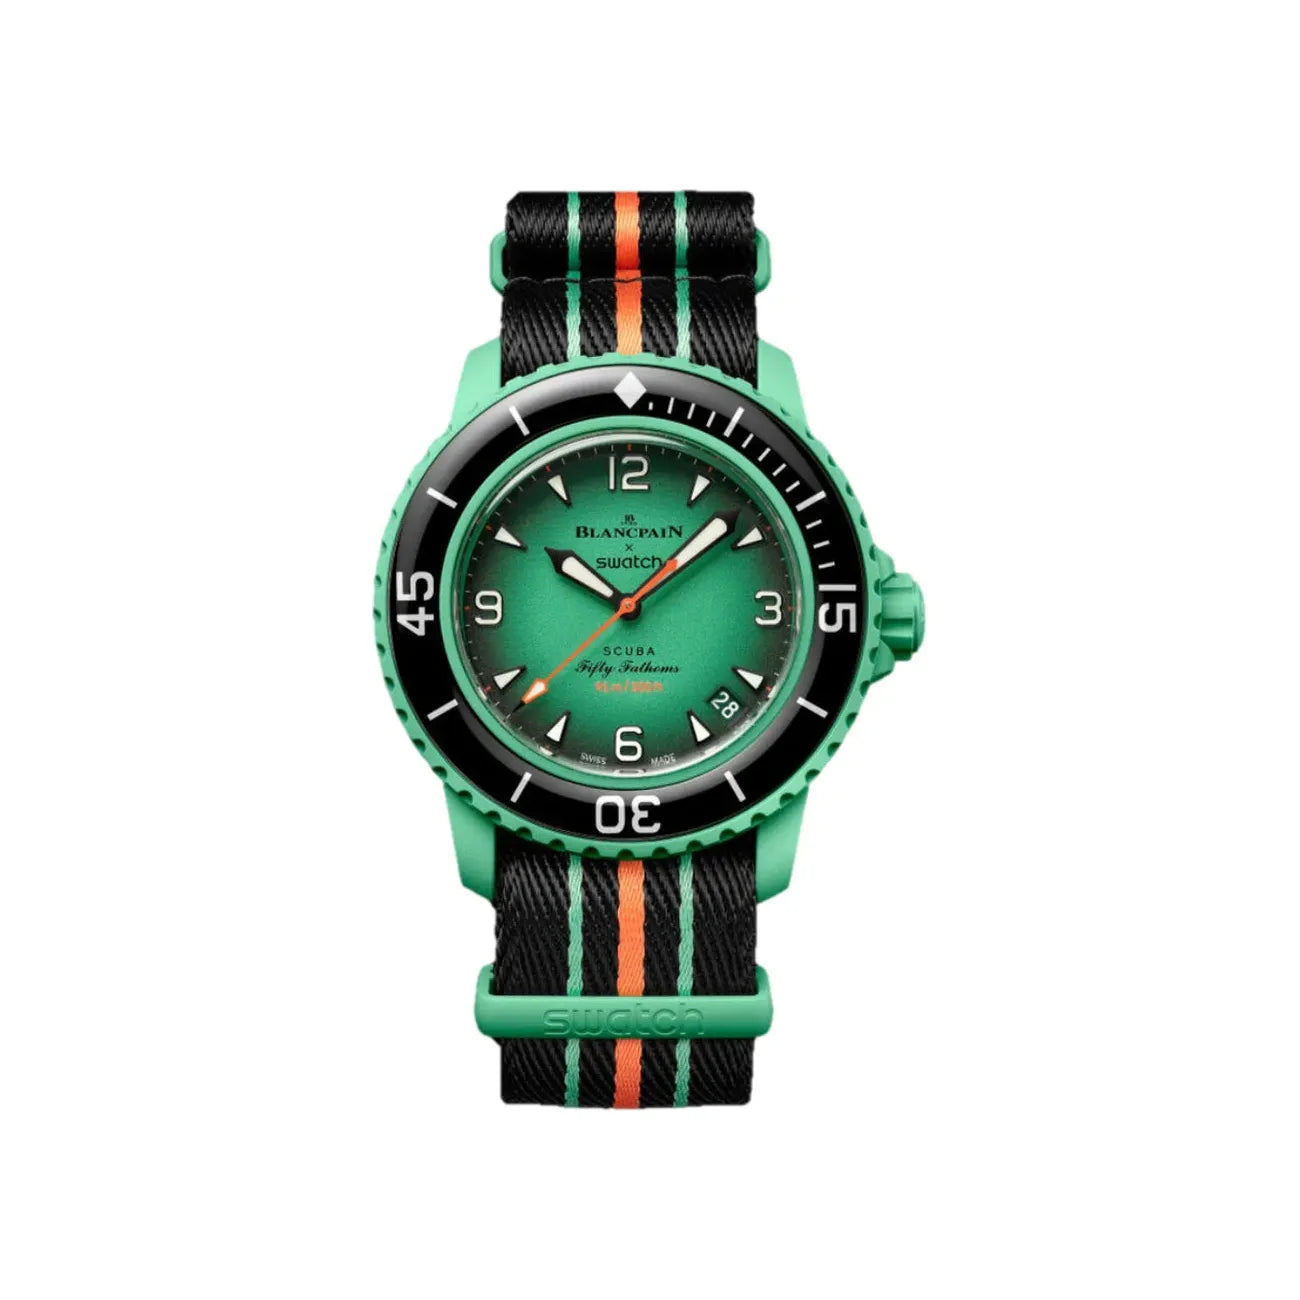 Swatch X Blancpain Bioceramic Scuba Fifty Fathoms Watch - Indian Ocean Green, Black & Orange